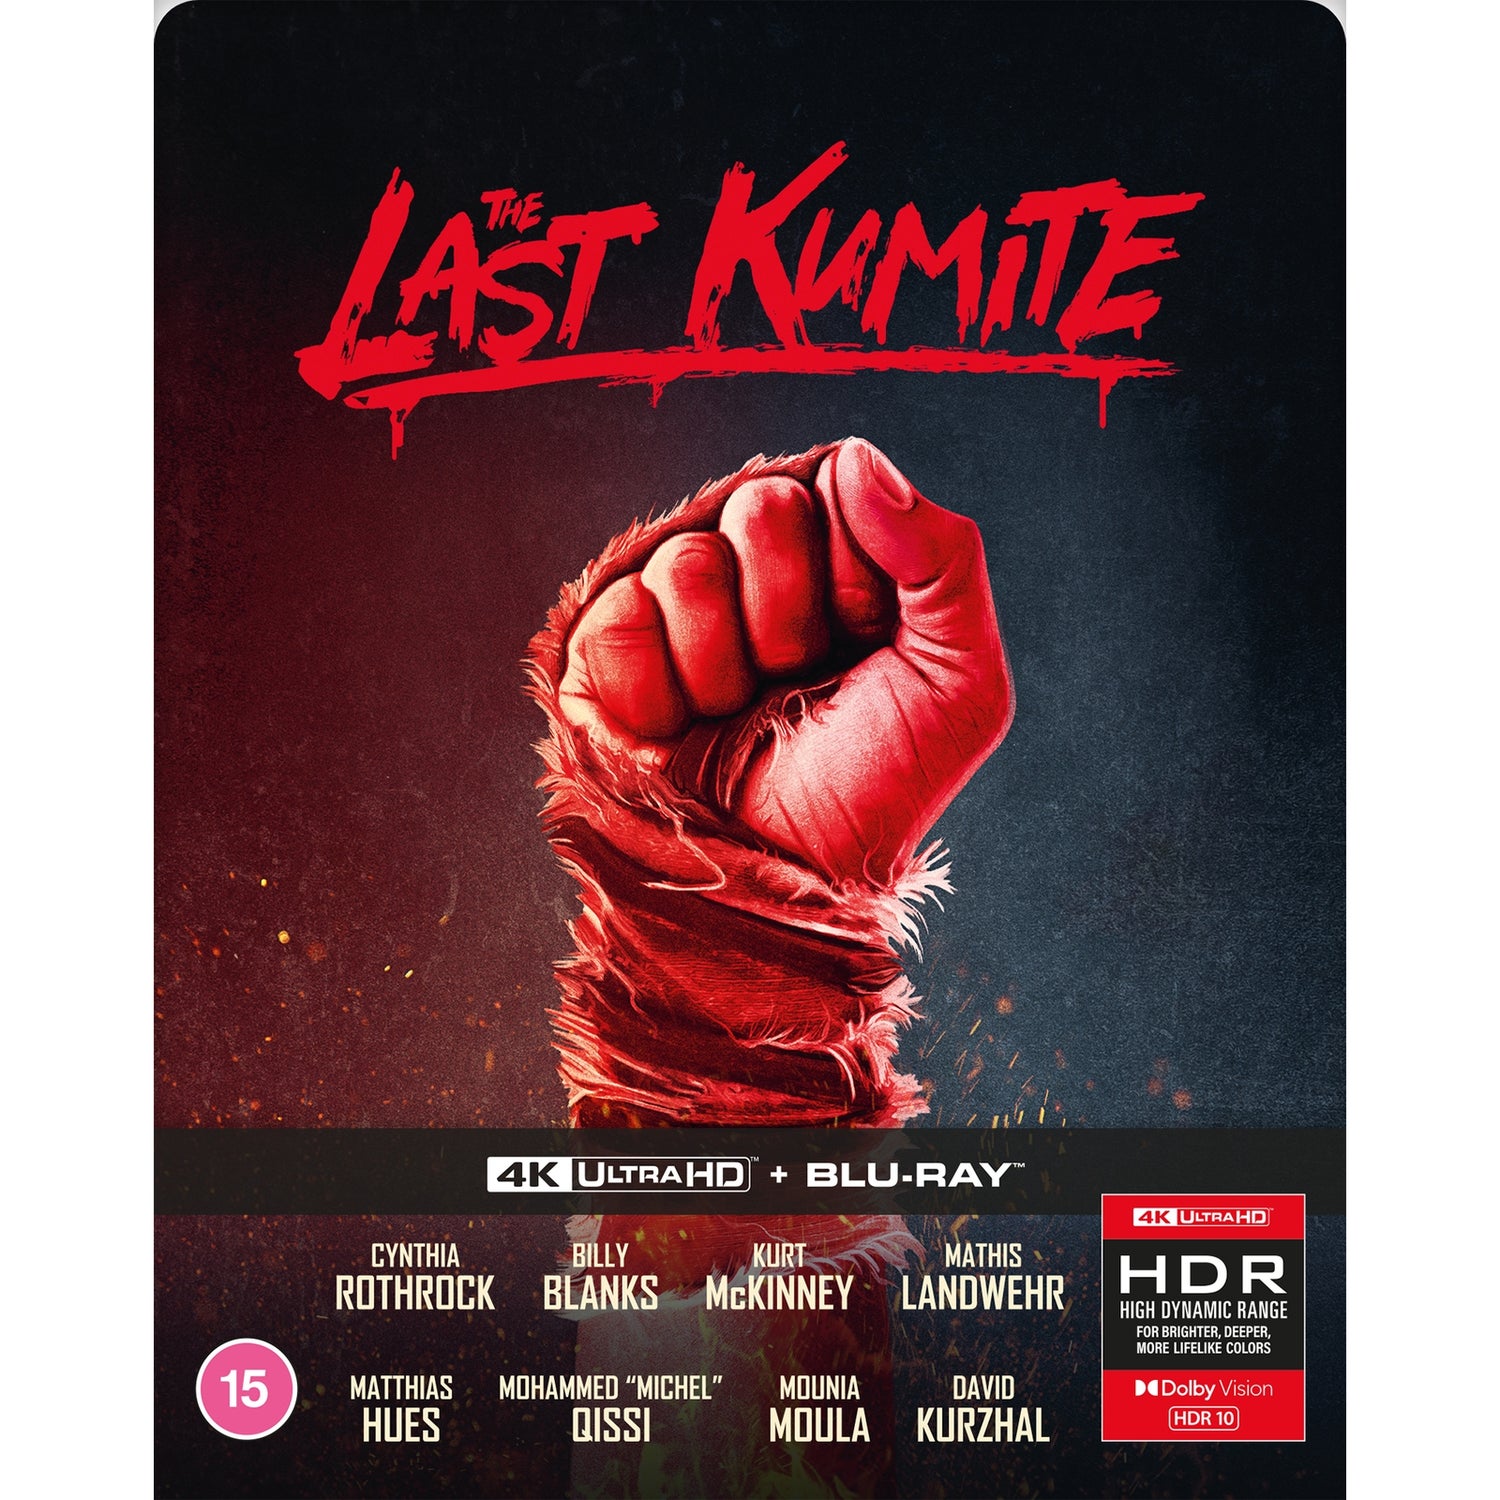 The Last Kumite 4K UHD & Blu-Ray Steelbook